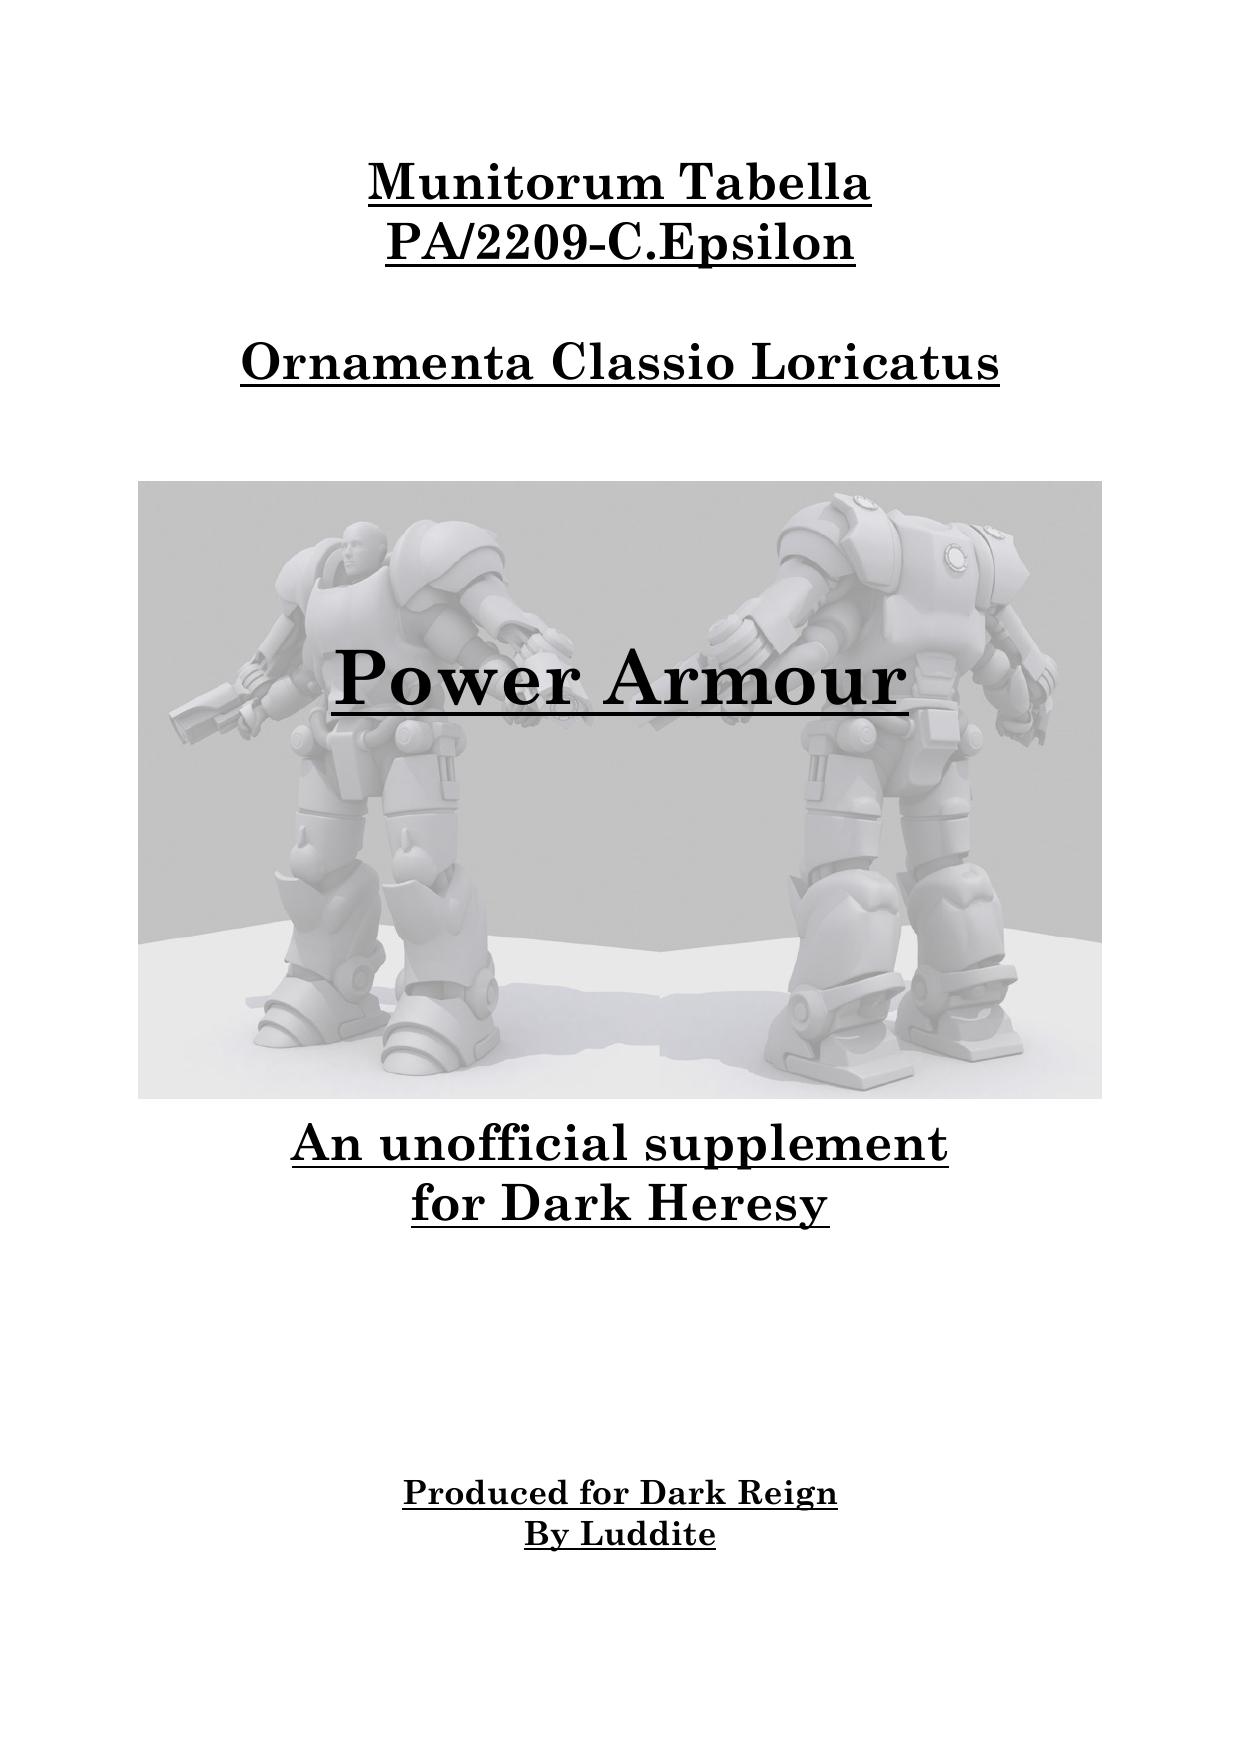 Microsoft Word - Power armour v3.doc